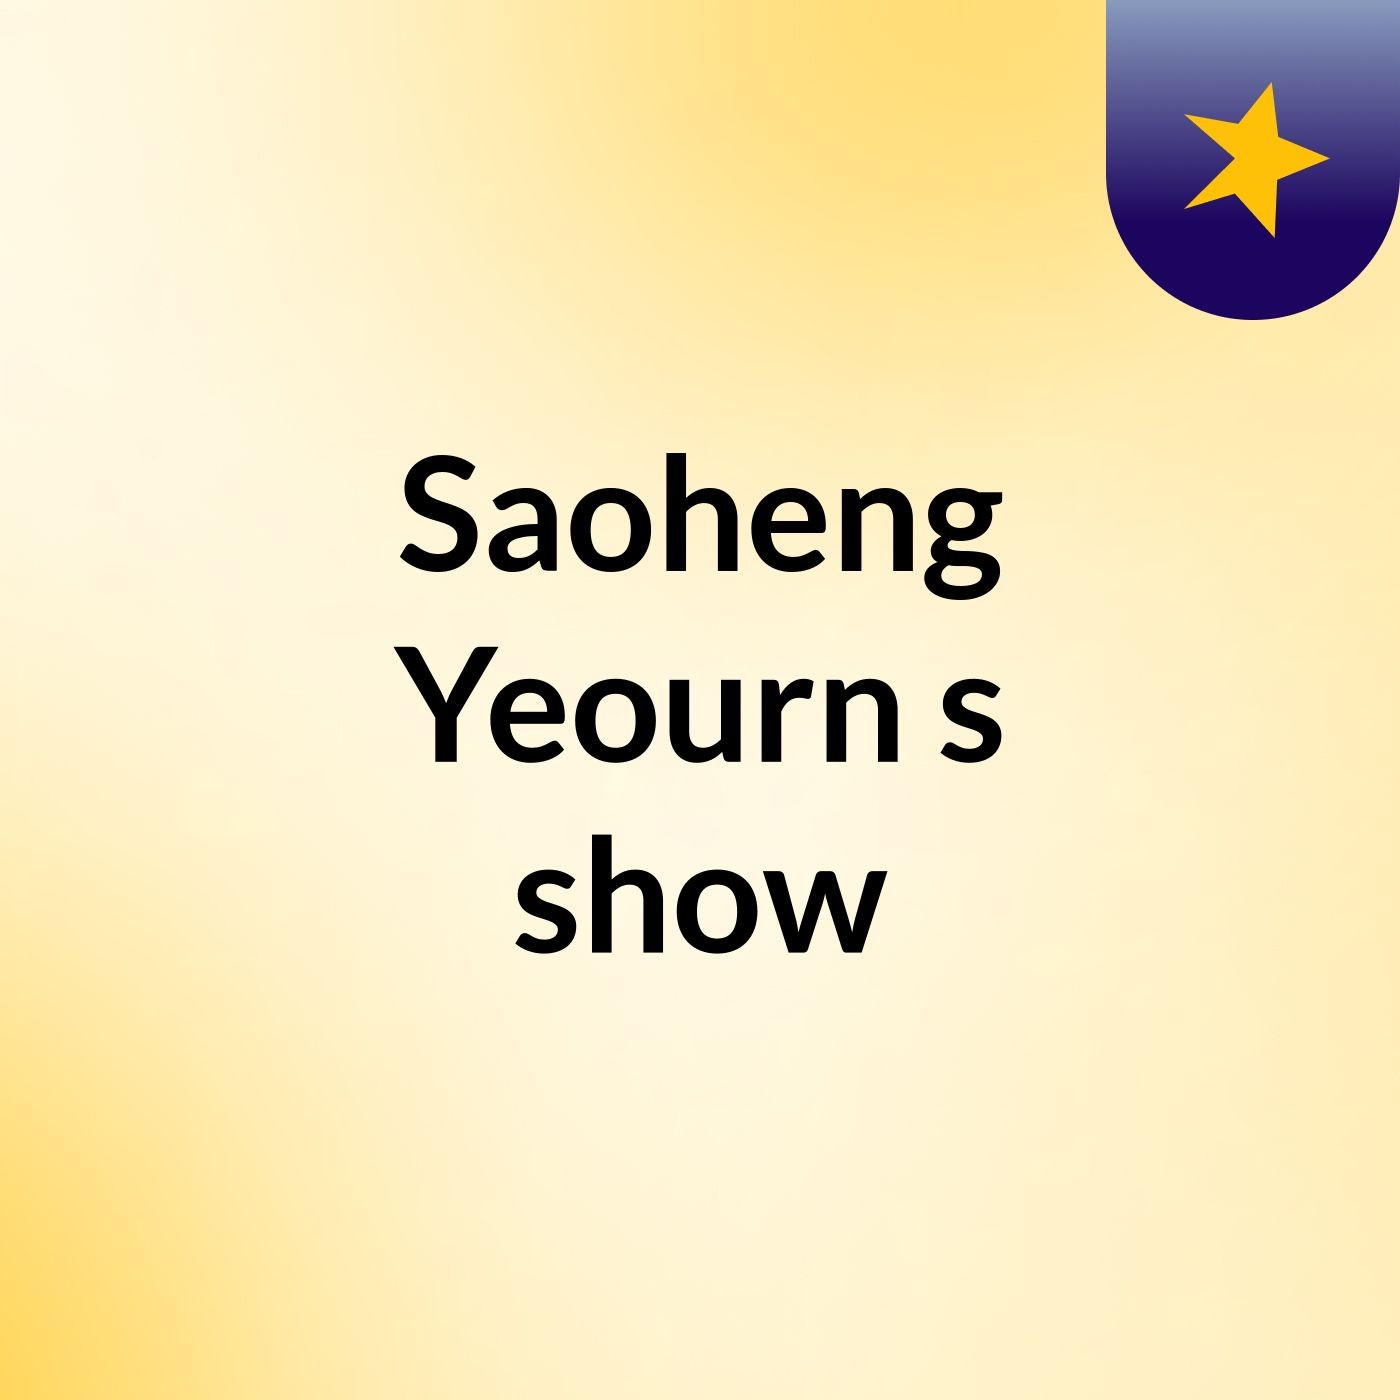 Saoheng Yeourn's show